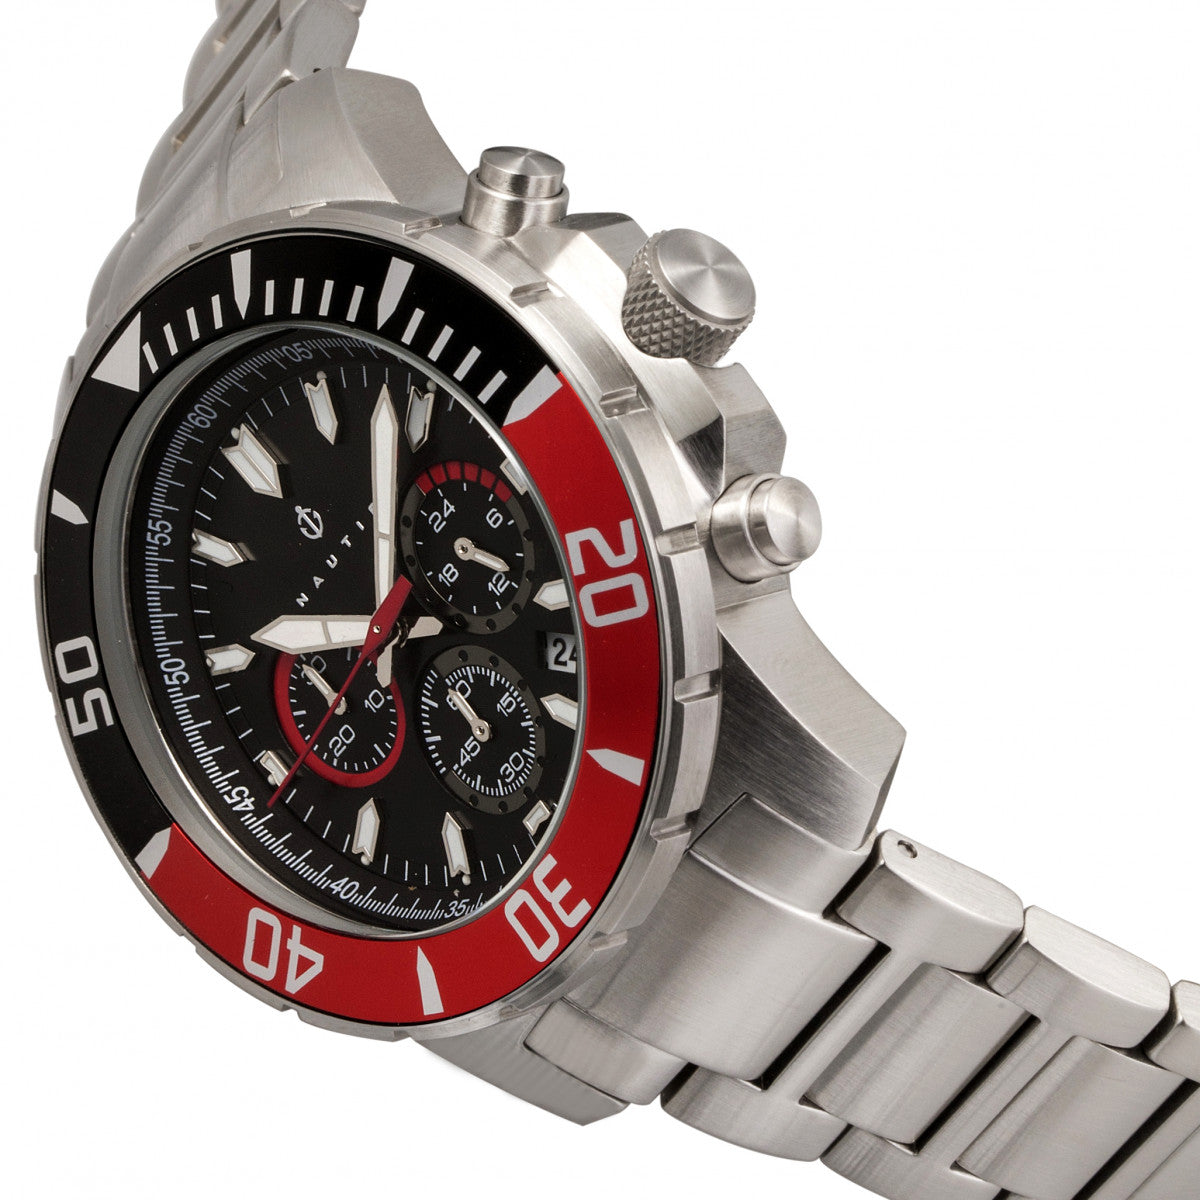 Nautis Dive Chrono 500 Chronograph Bracelet Watch - Black/Red - 17065-J